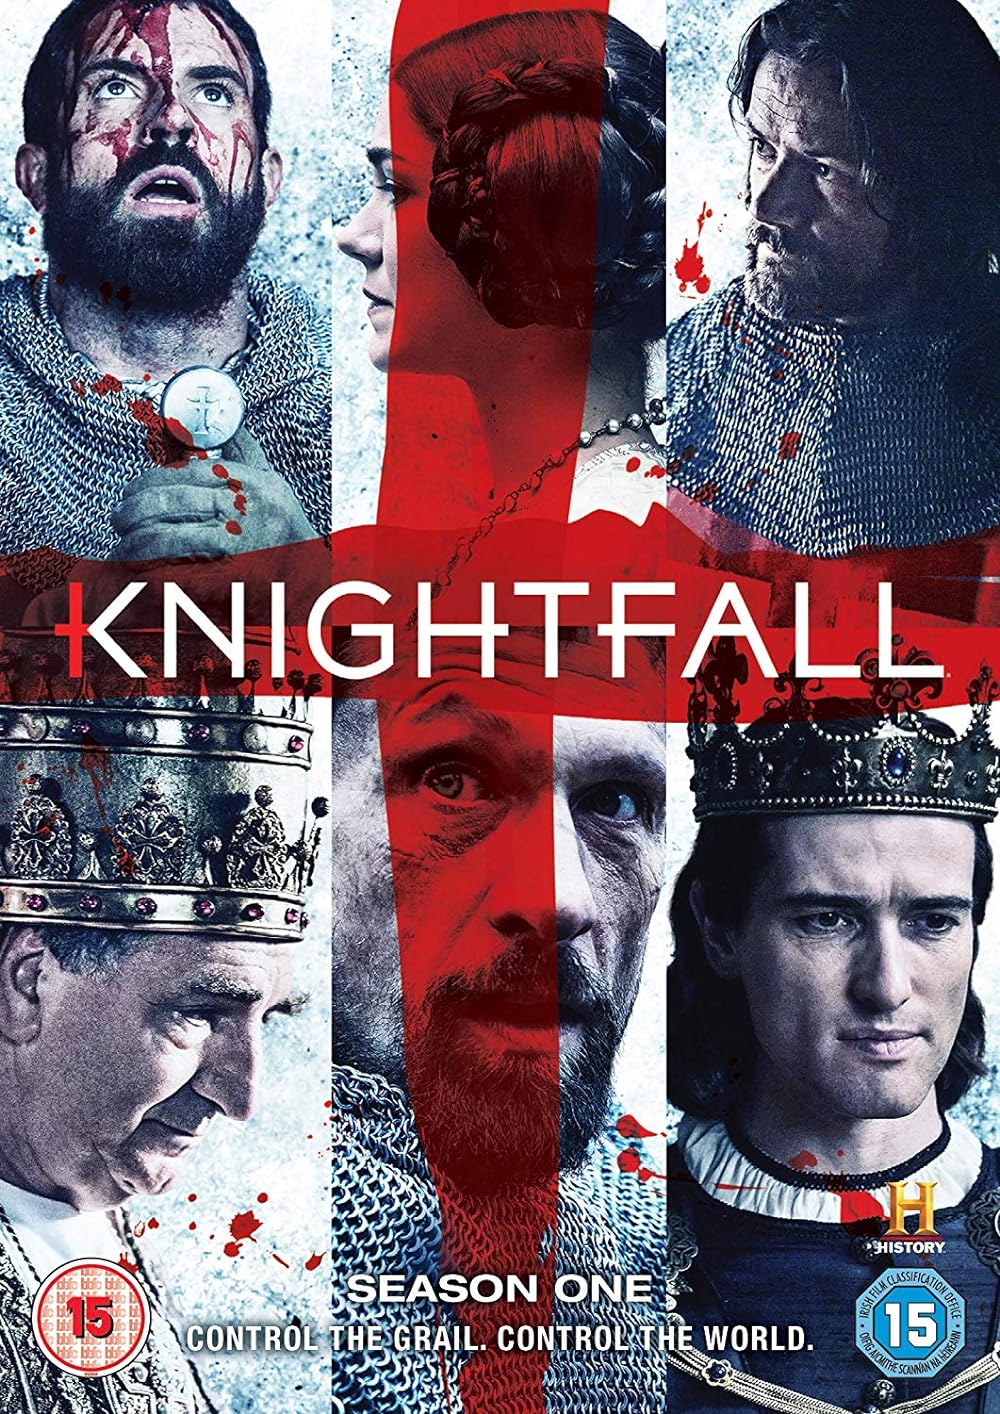 Knightfall (2017&2018) EP01&EP10 640Kbps 23.976Fps 48Khz 5.1Ch DD+ AMZN E-AC3 Turkish Audio TAC